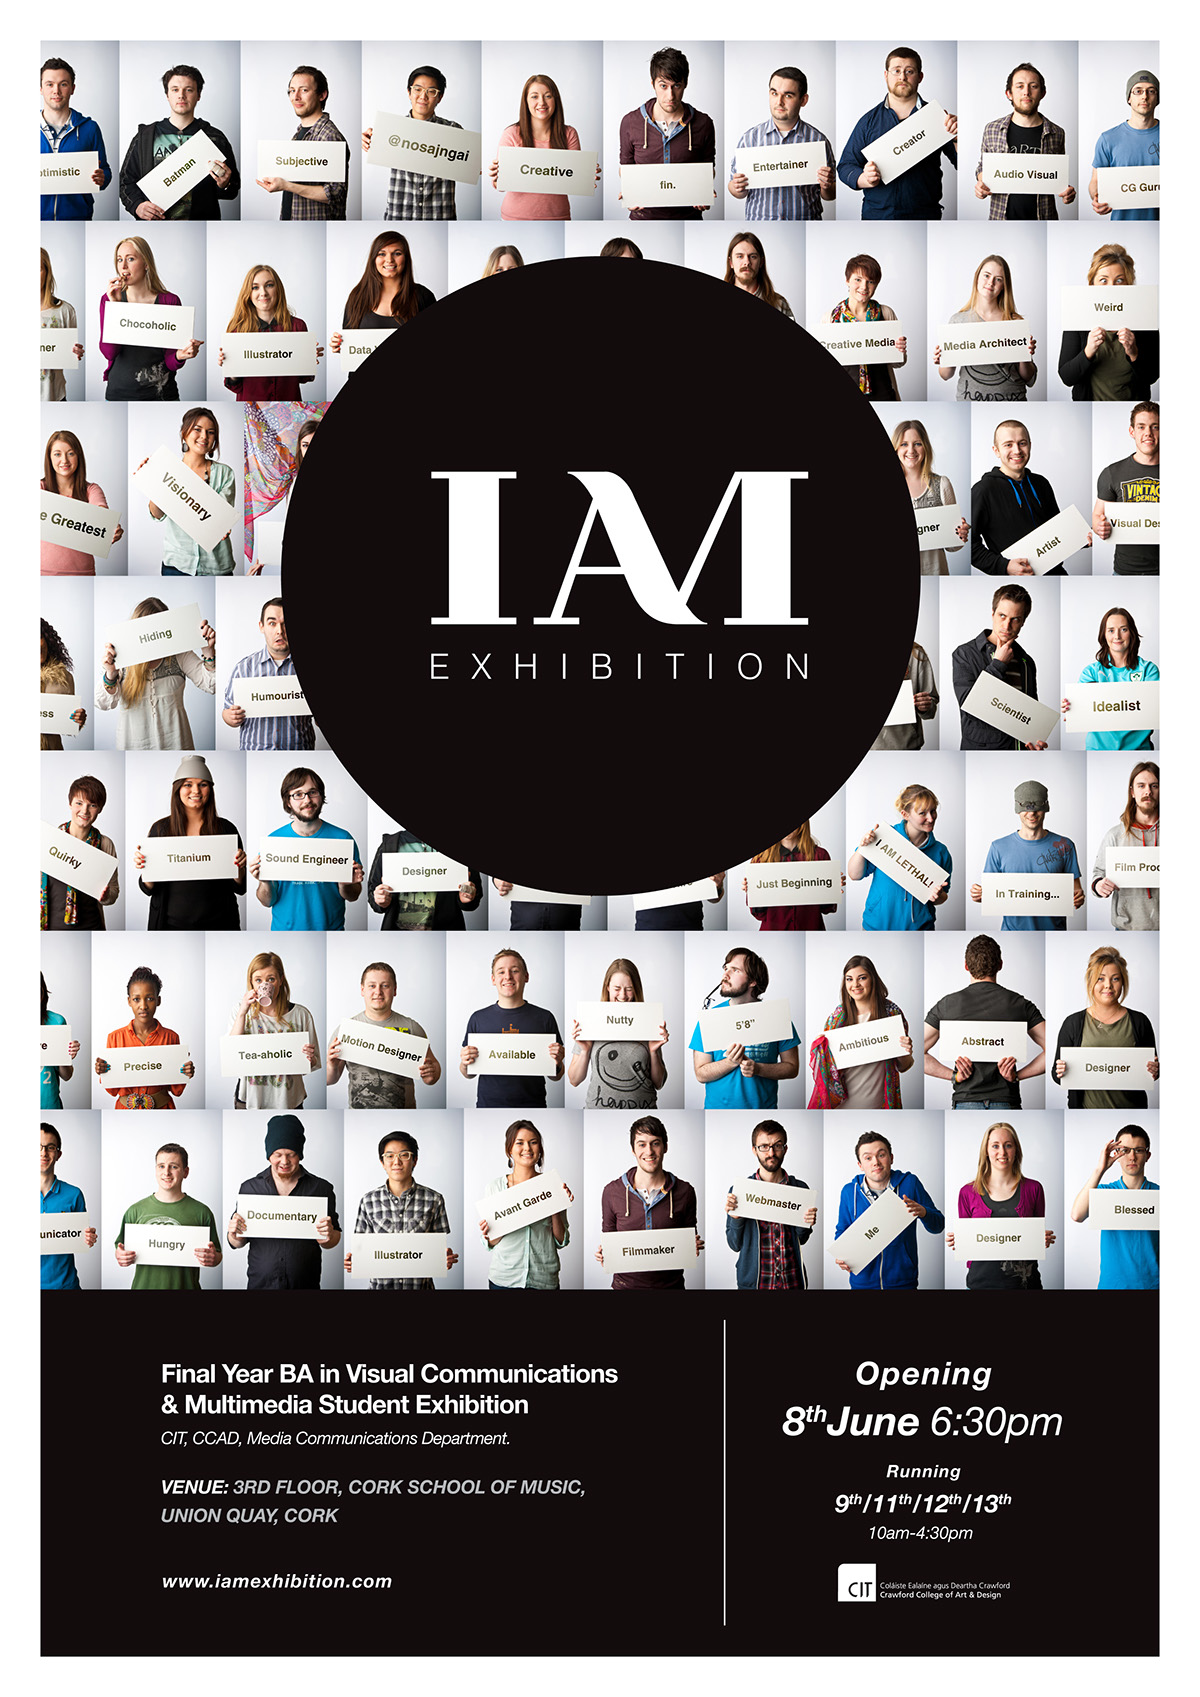 iam exhibition  Webdesign typography   Promotion Signage twitter social media branding  Photography 